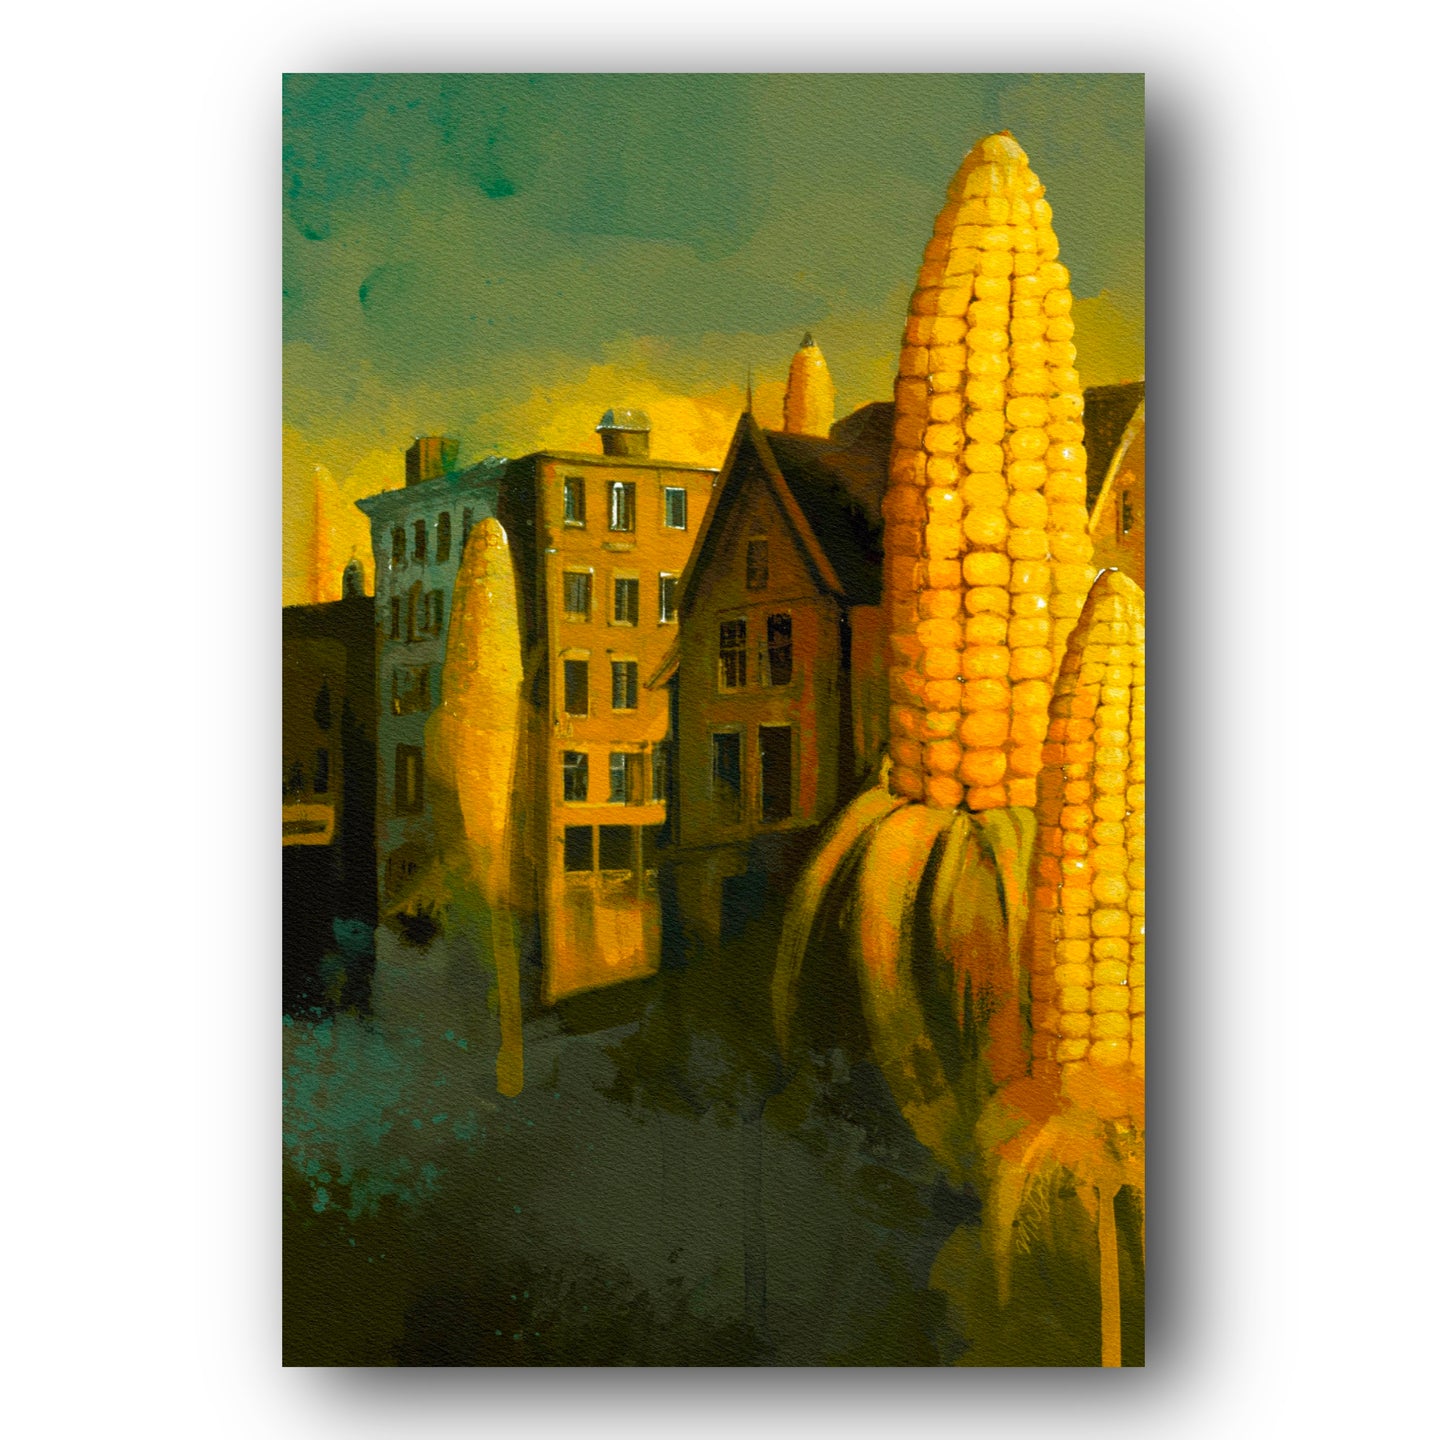 Corn City Postcards - NEW